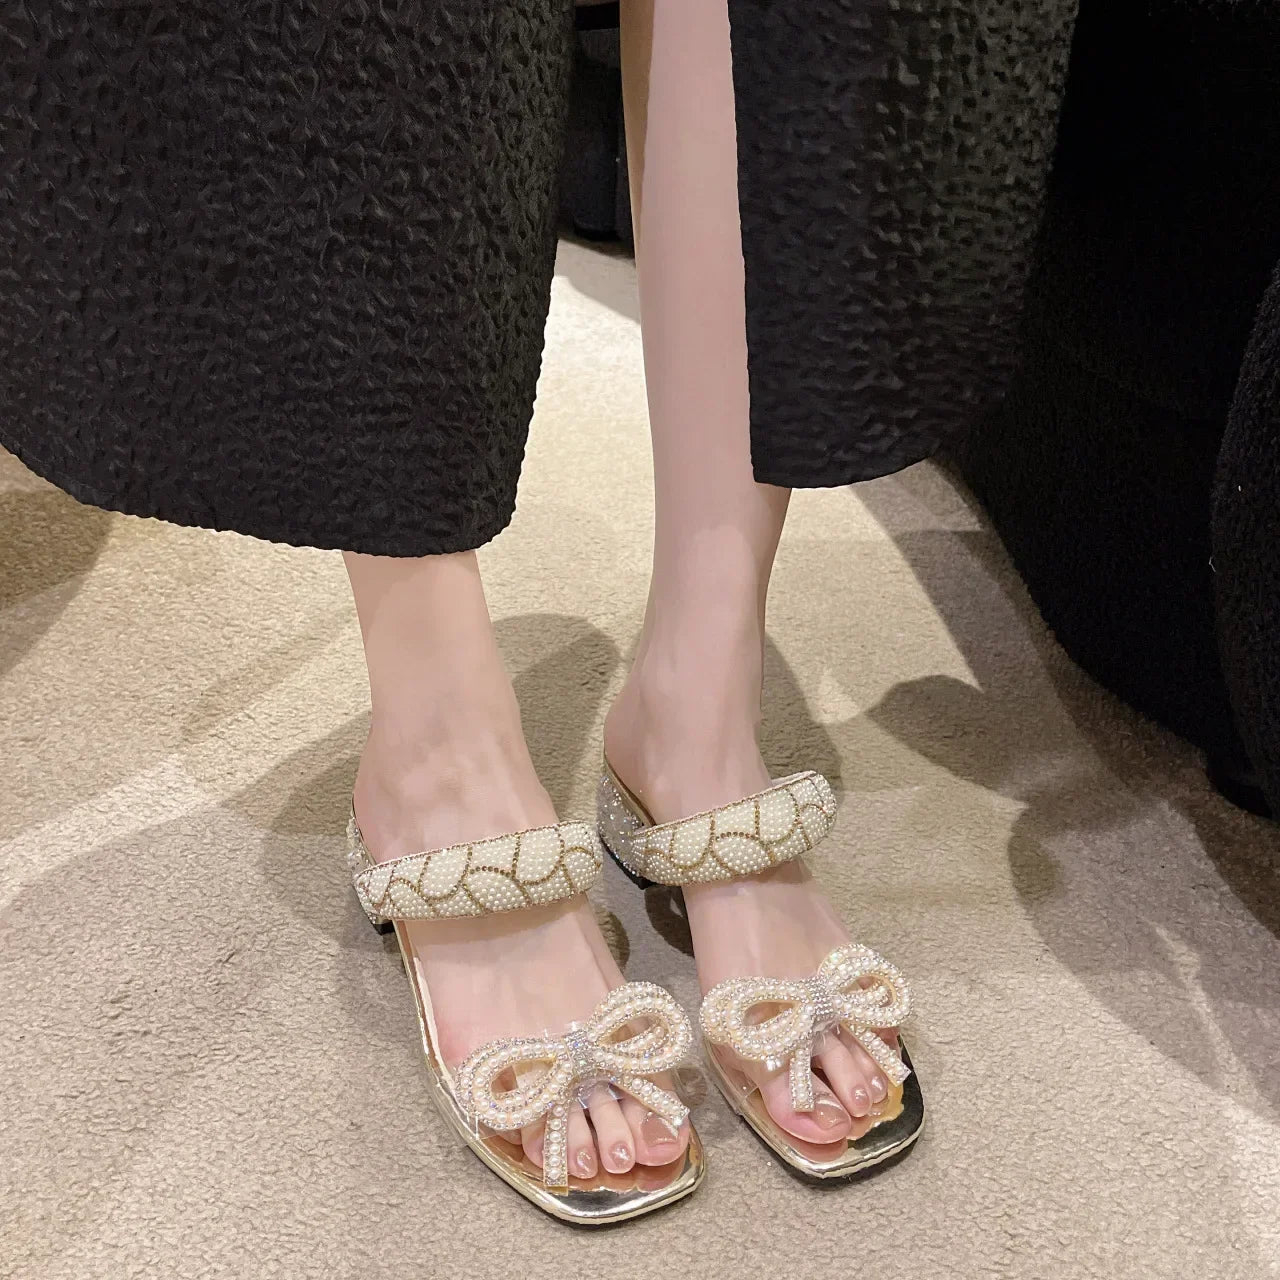 Canmol Pearls Beaded Chunky Heel Sandals - Rhinestone Bowknot Design